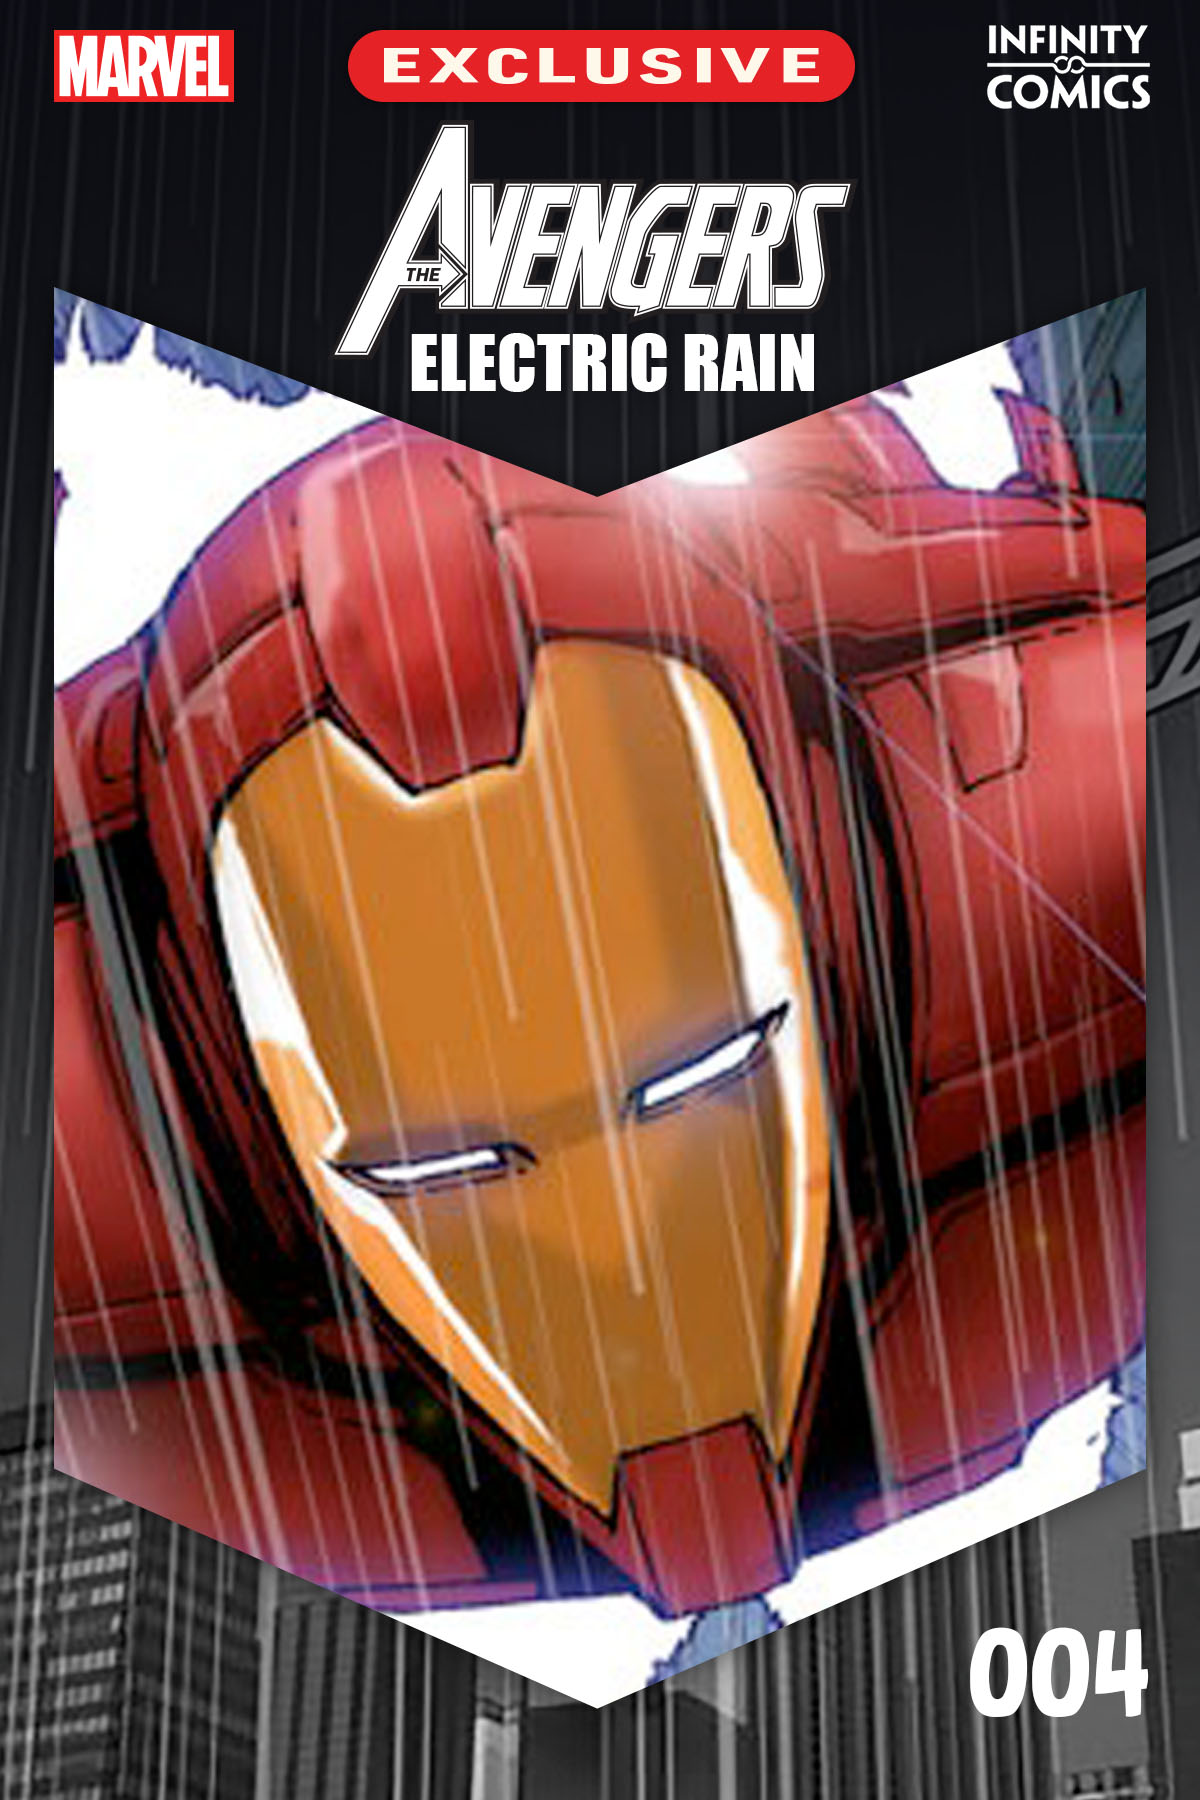 Avengers: Electric Rain Infinity Comic (2022) #4